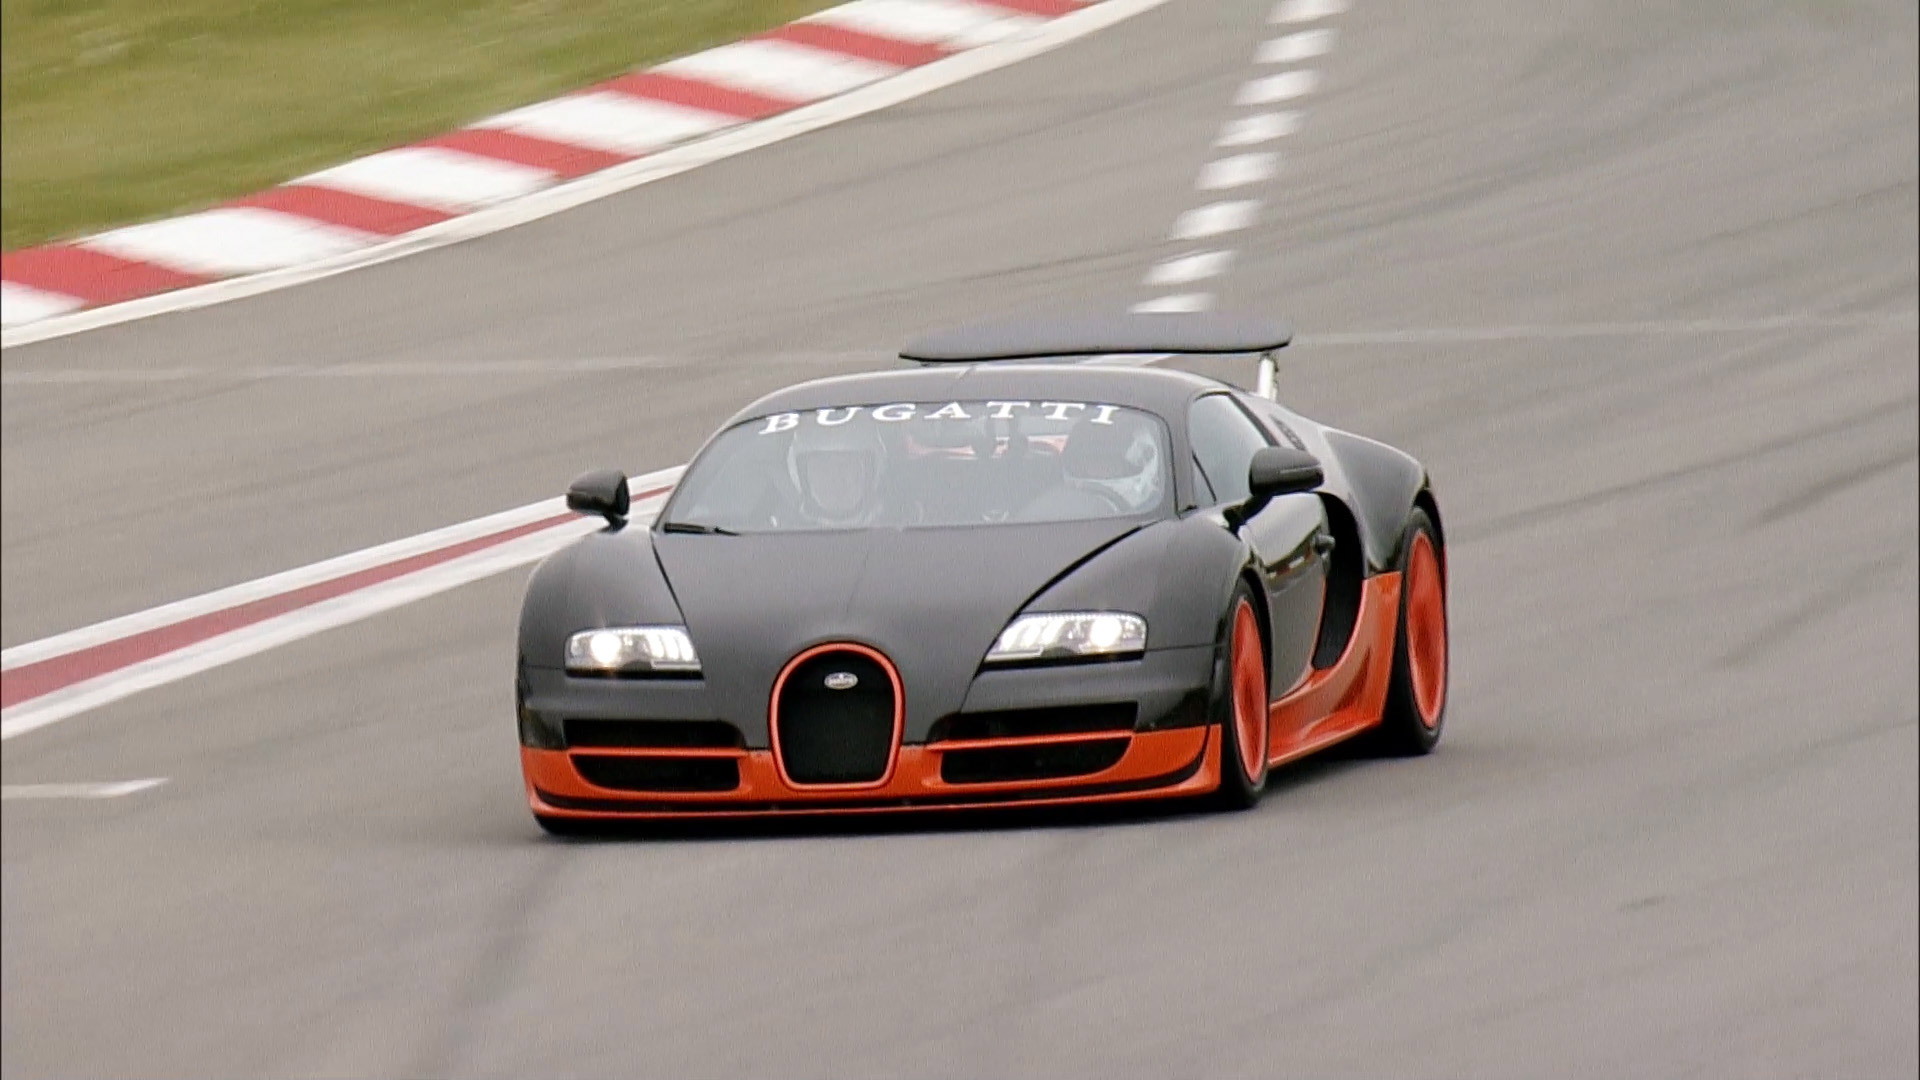 Bugatti Veyron Super Sport and Veyron Grand Sport Vitesse land speed record holders